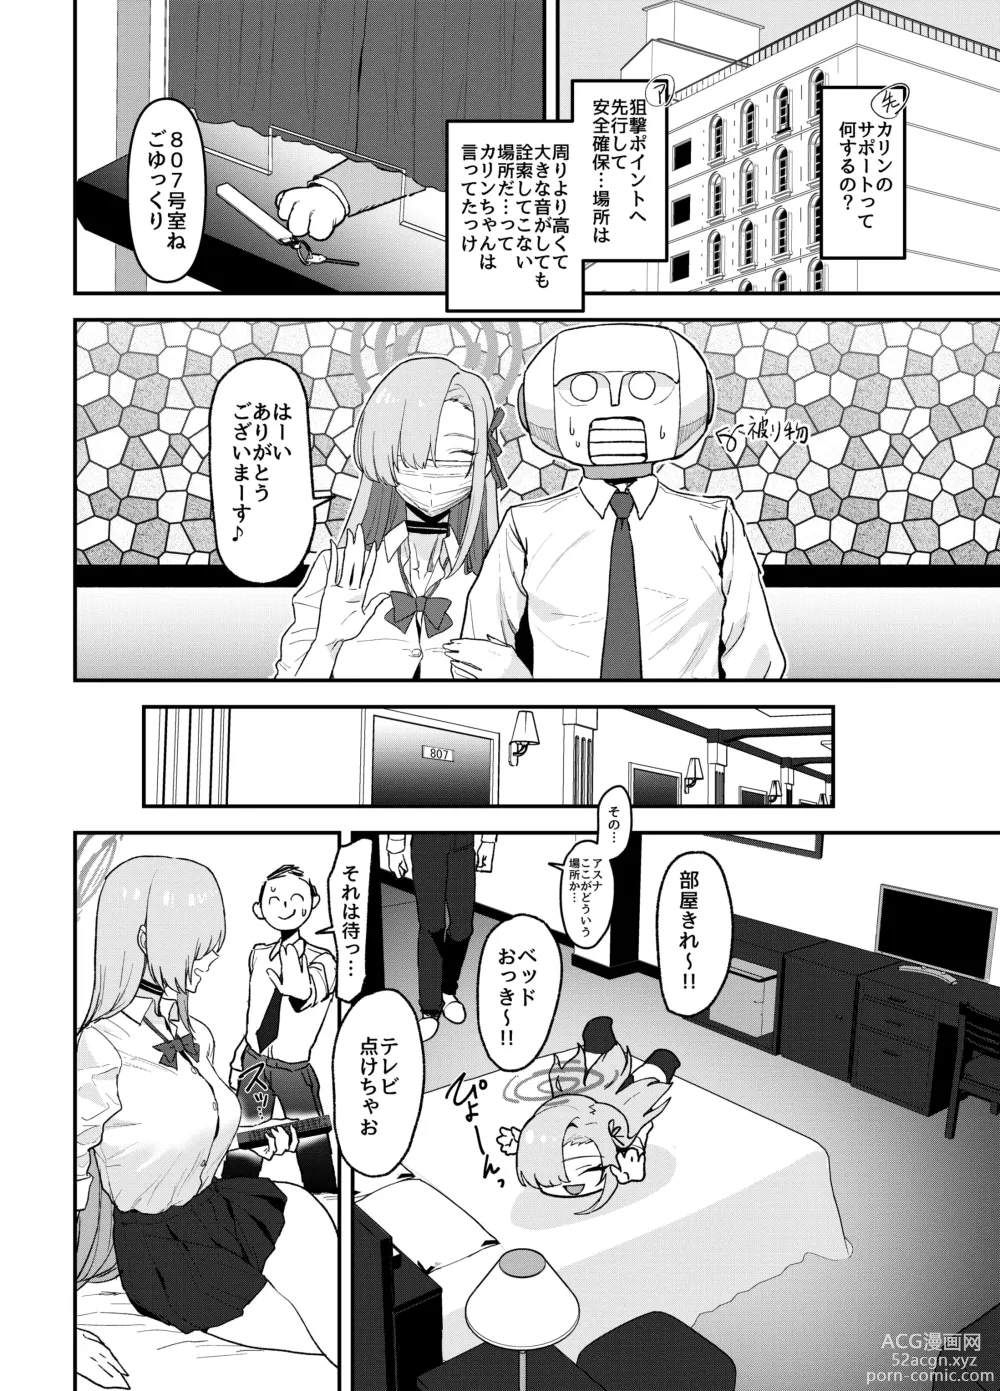 Page 8 of doujinshi Asuna OVERLOAD OVERCOME